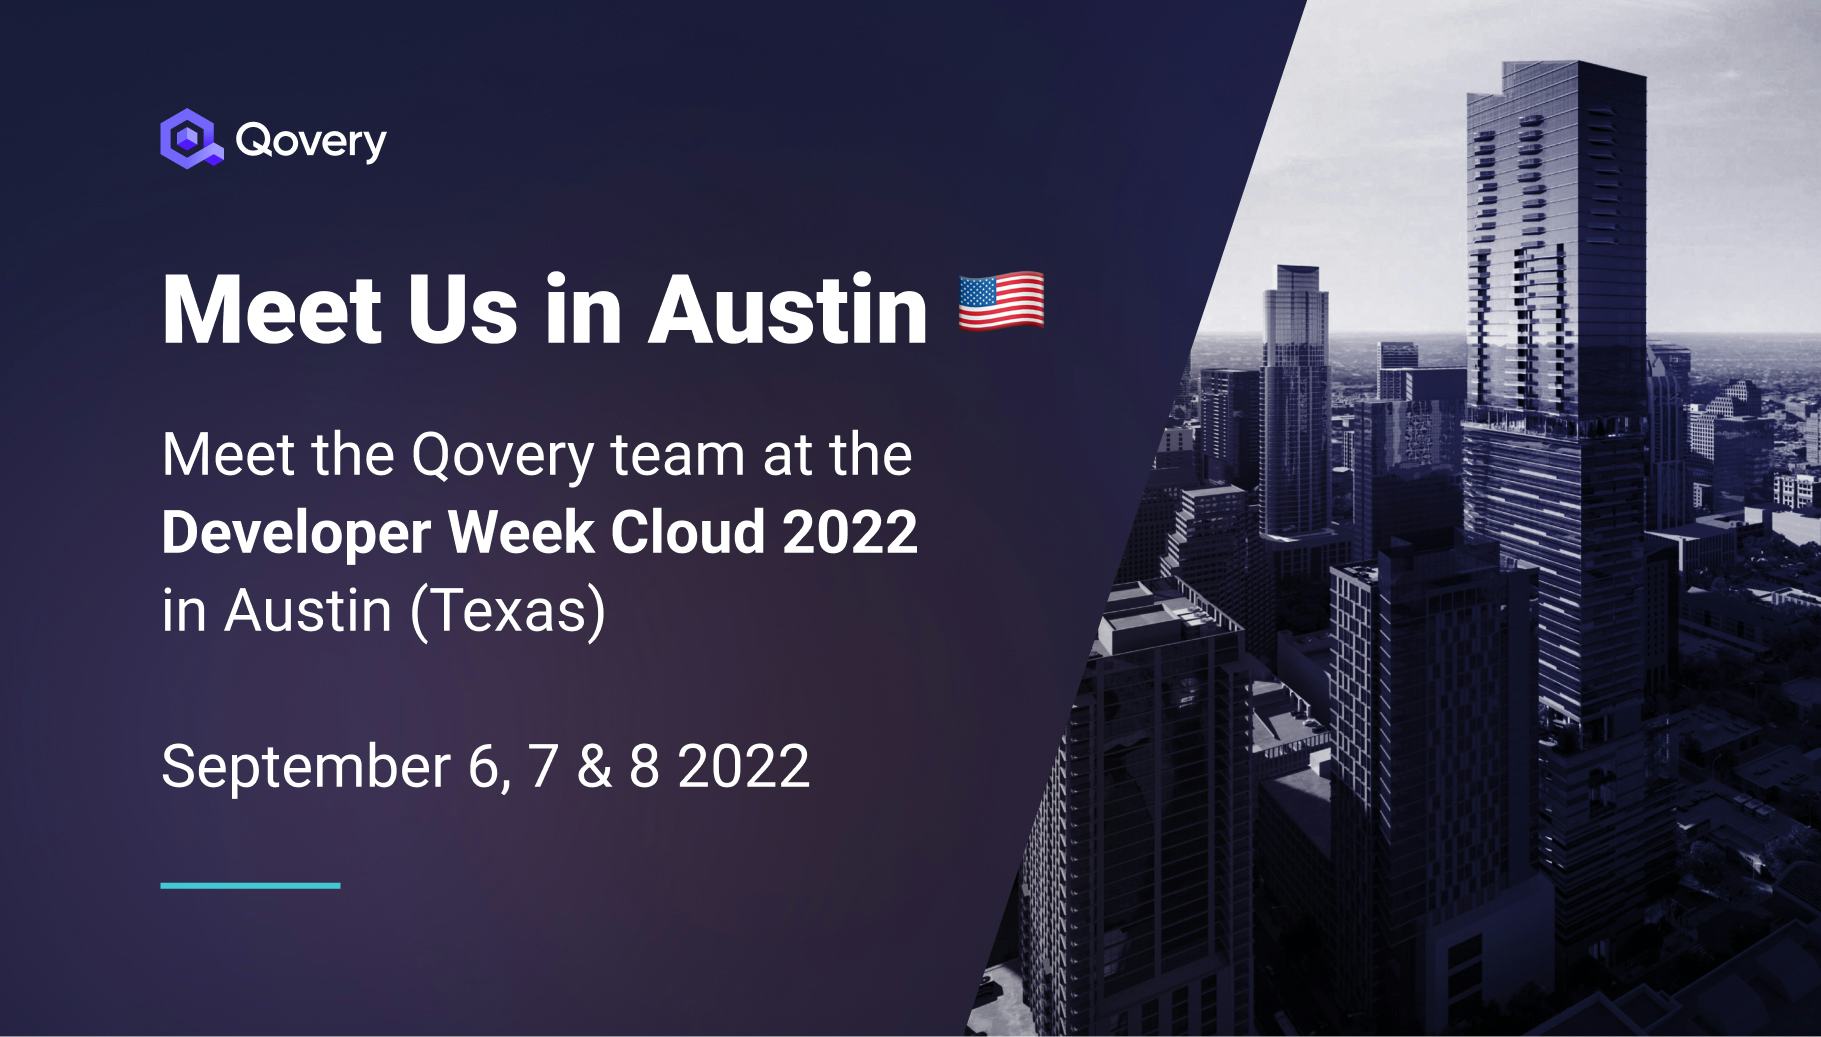 Developer Week Cloud - Qovery is coming to Austin 🇺🇸 - Qovery